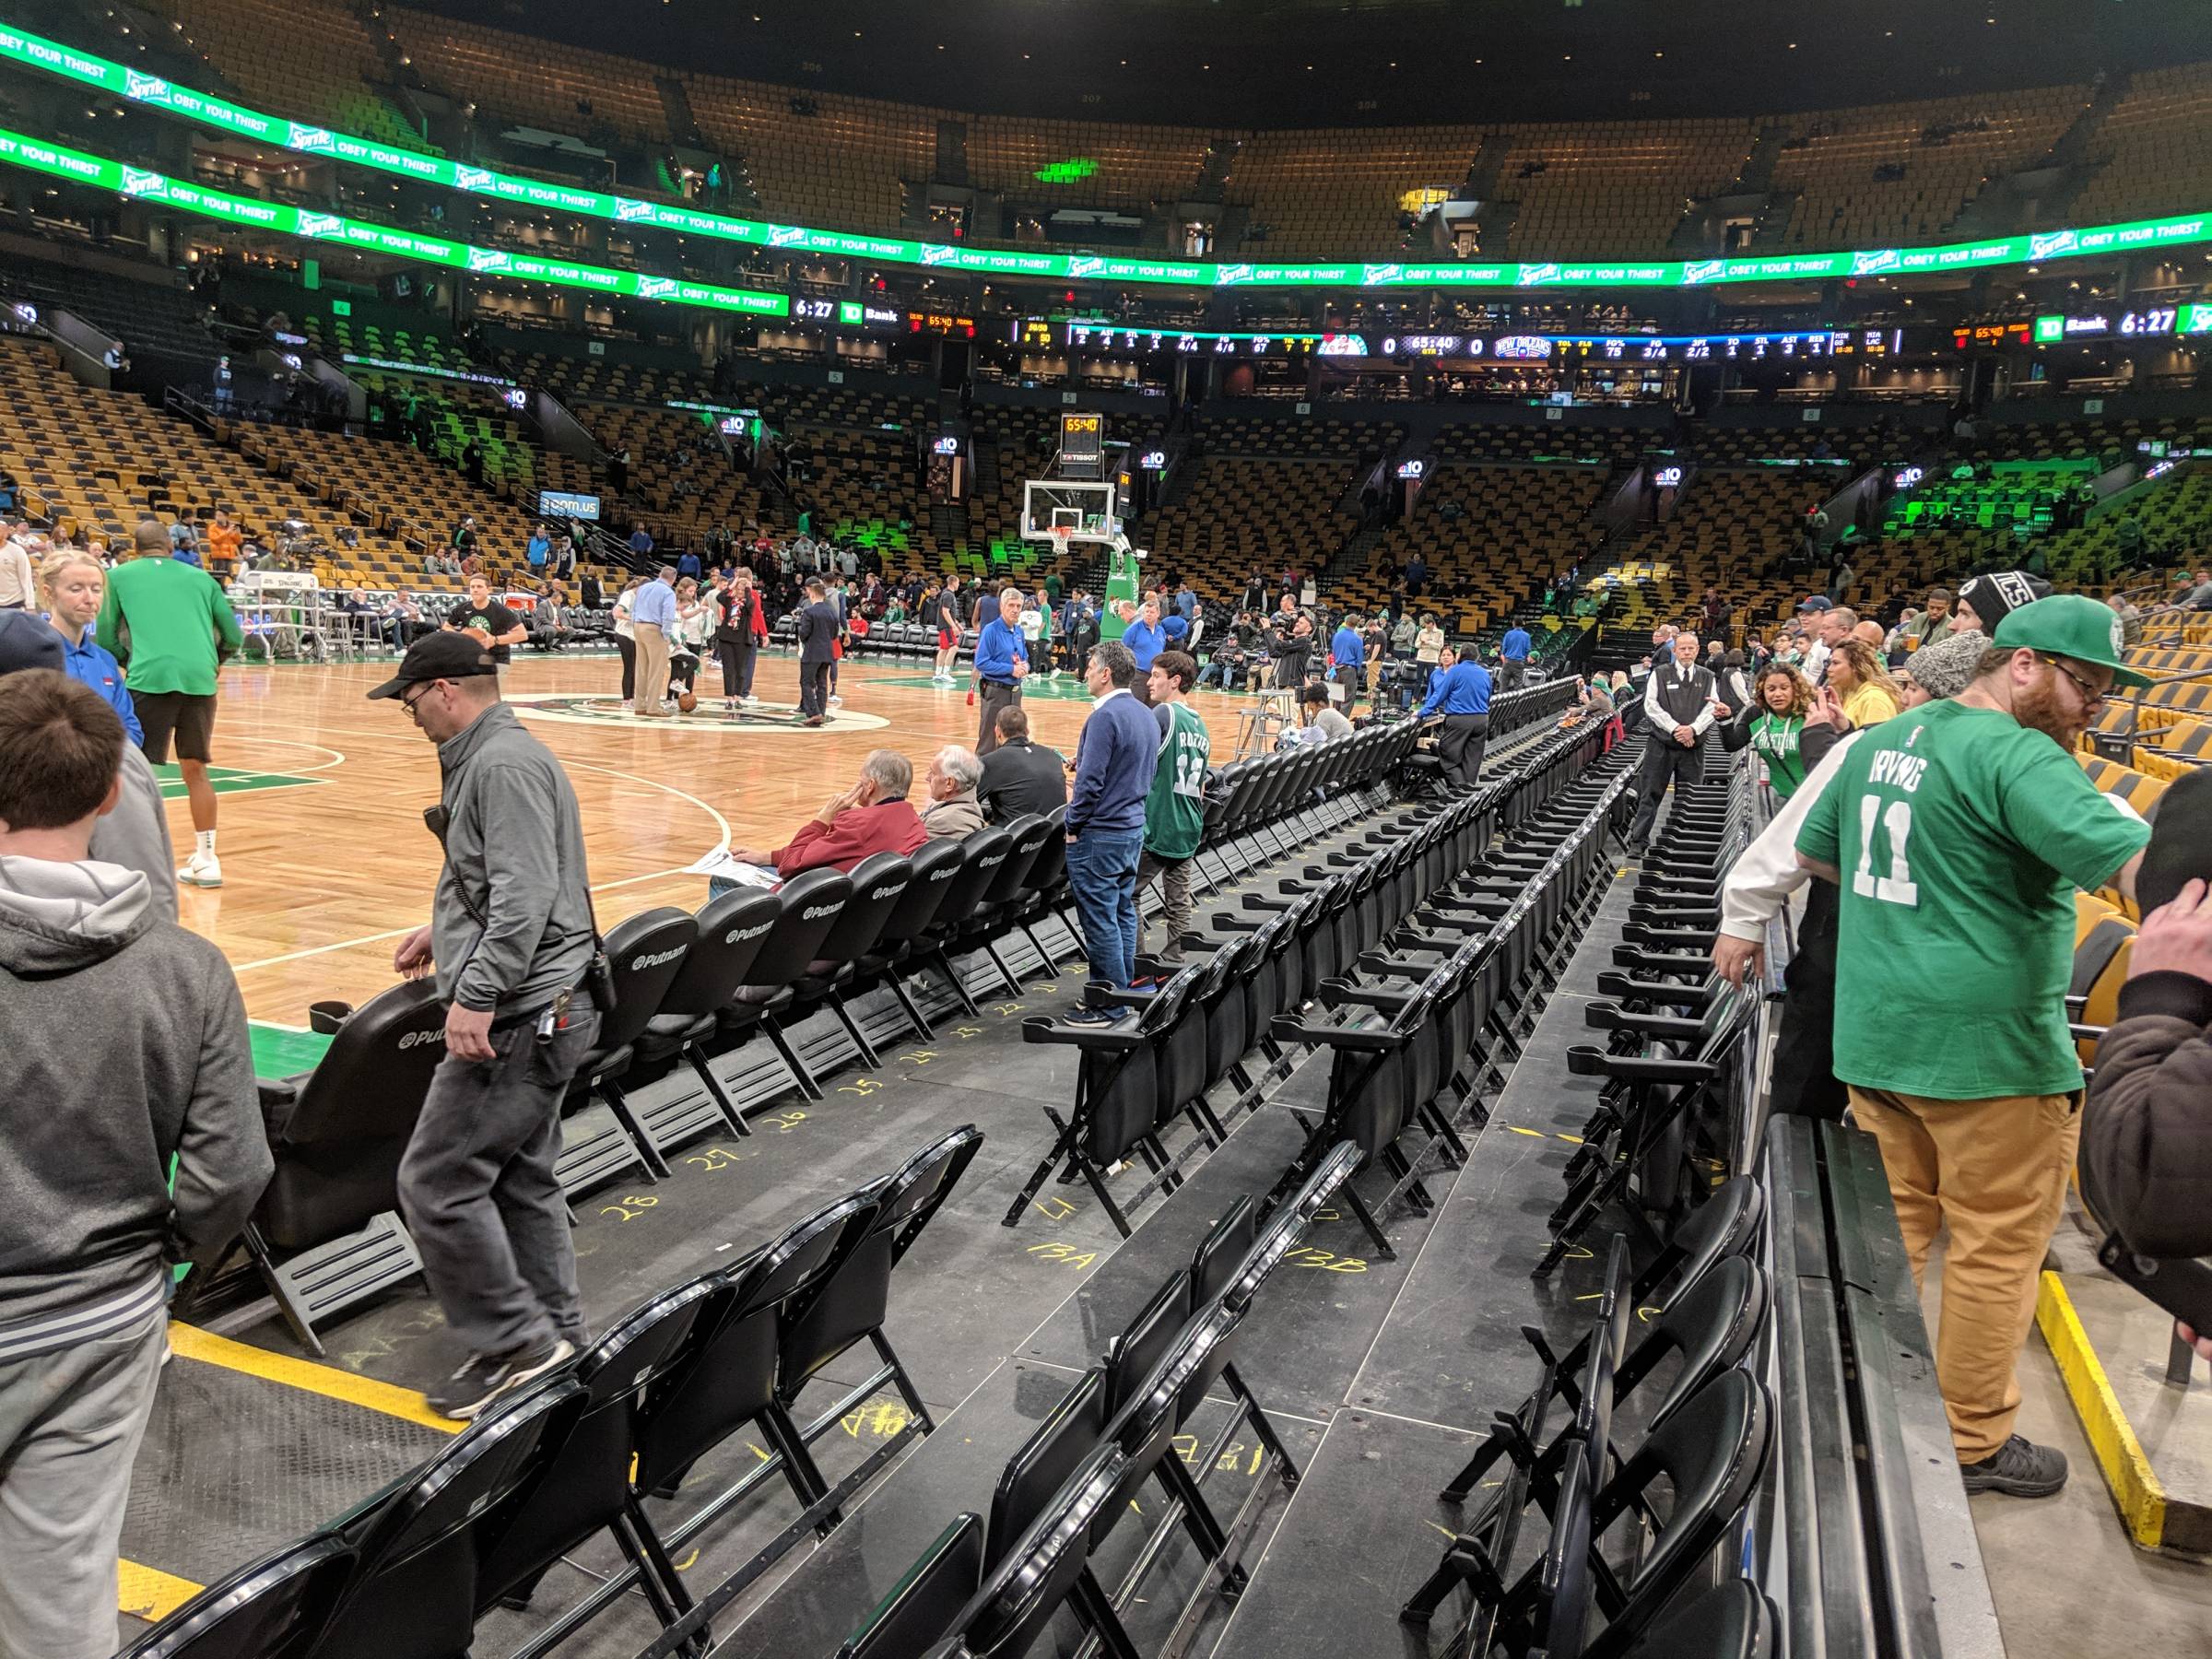 courtside seats at TD Garden in Boston